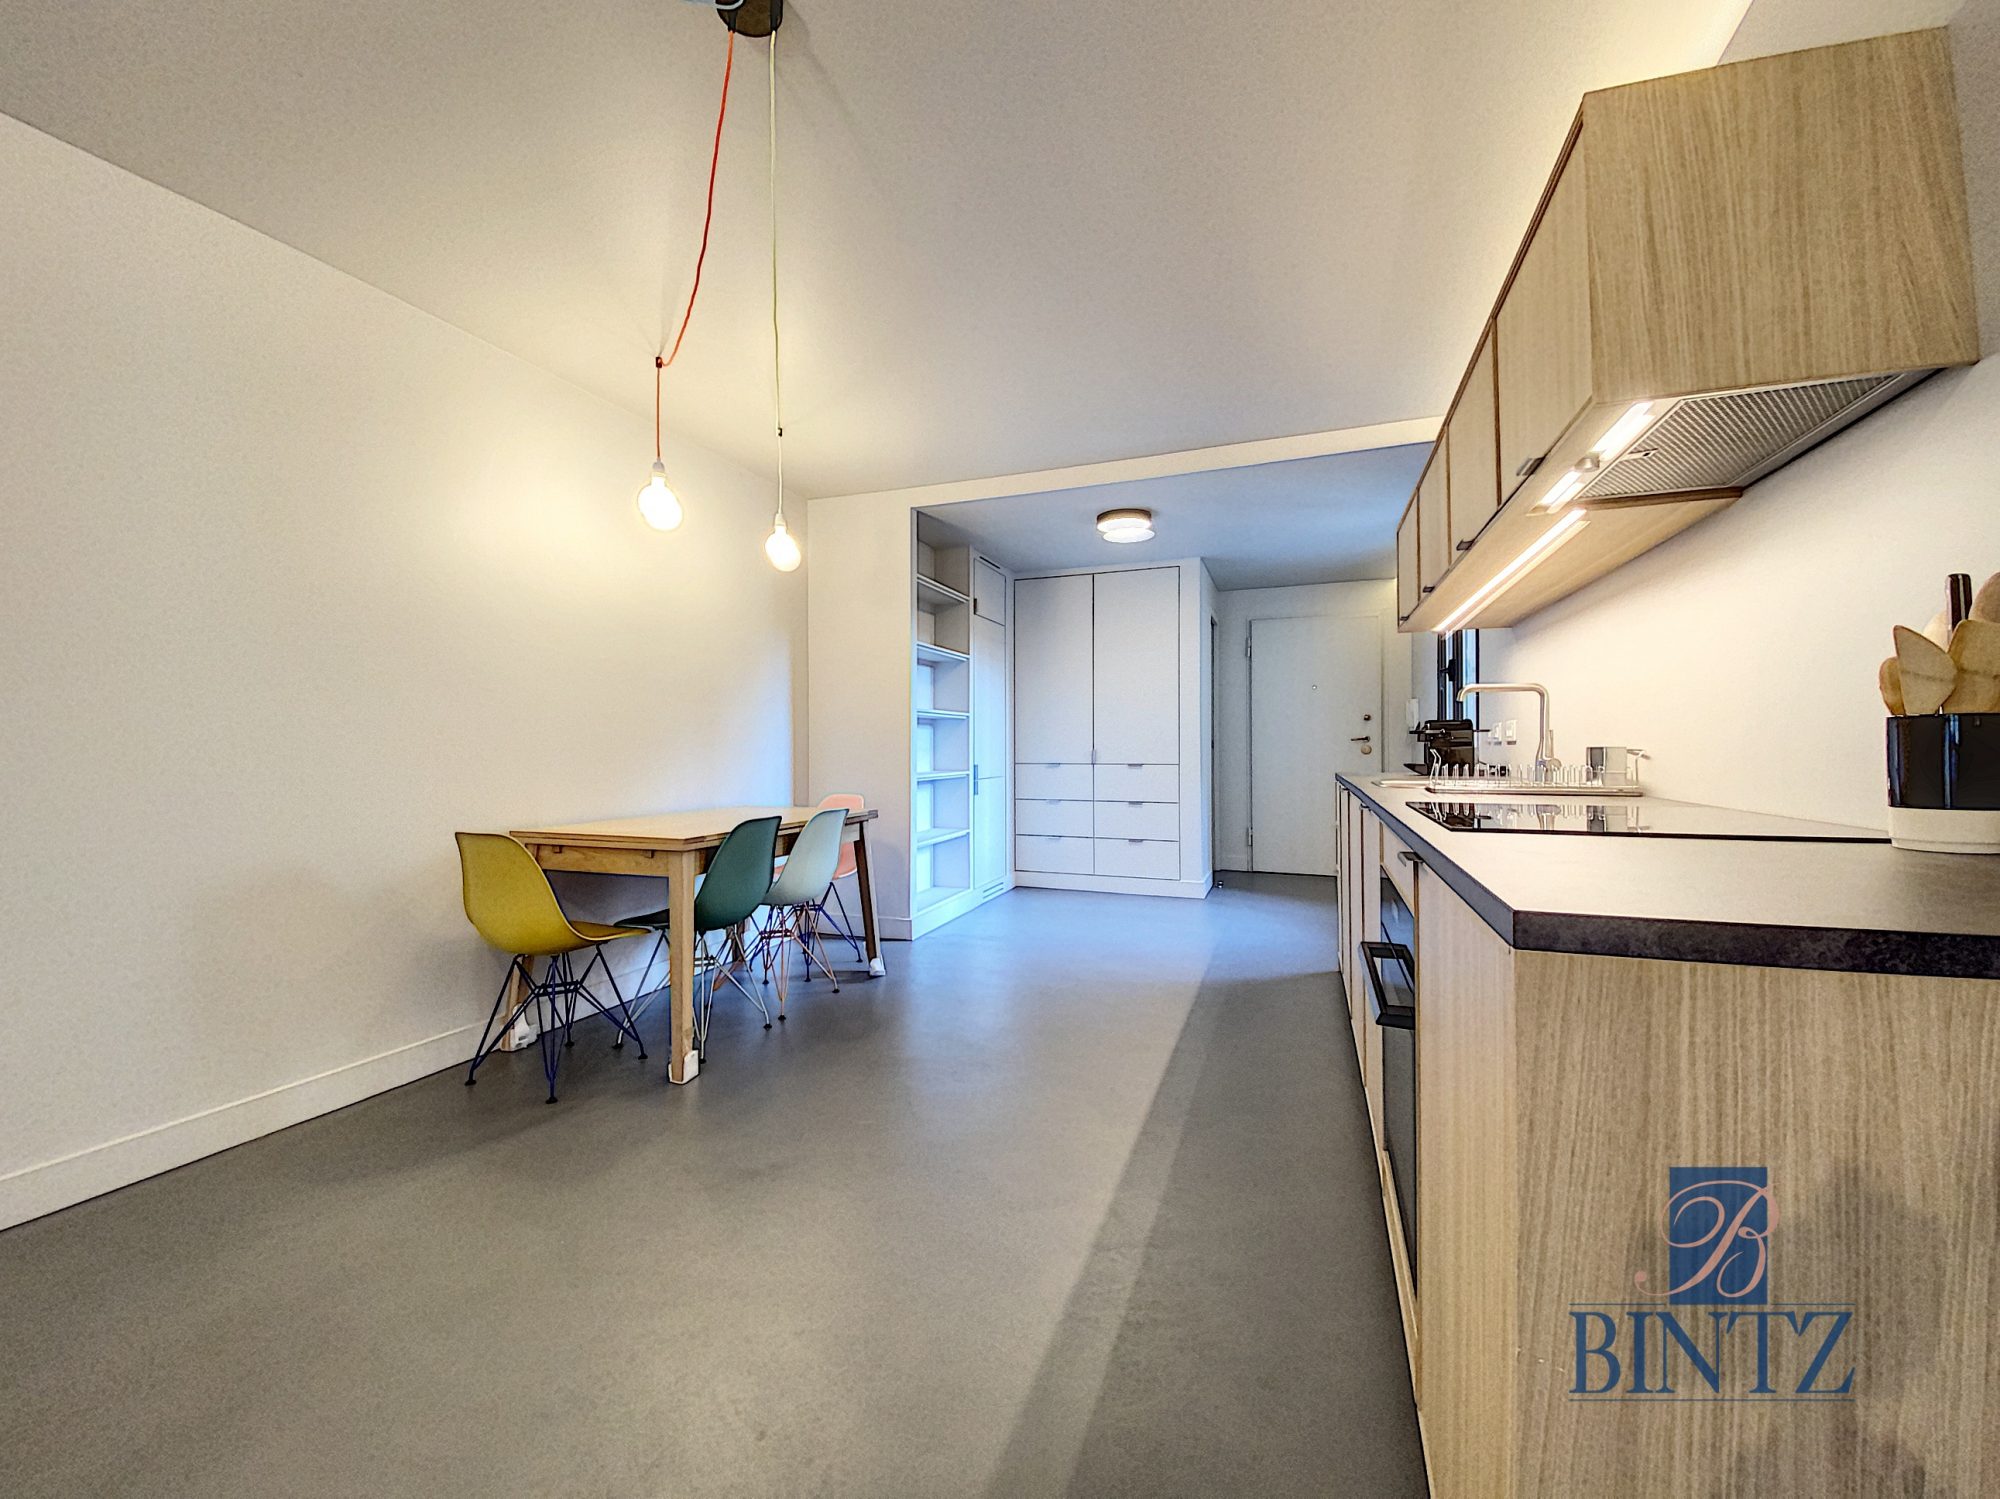 4 PIECE MEUBLE HYPERCENTRE - location appartement Strasbourg - Bintz Immobilier - 12